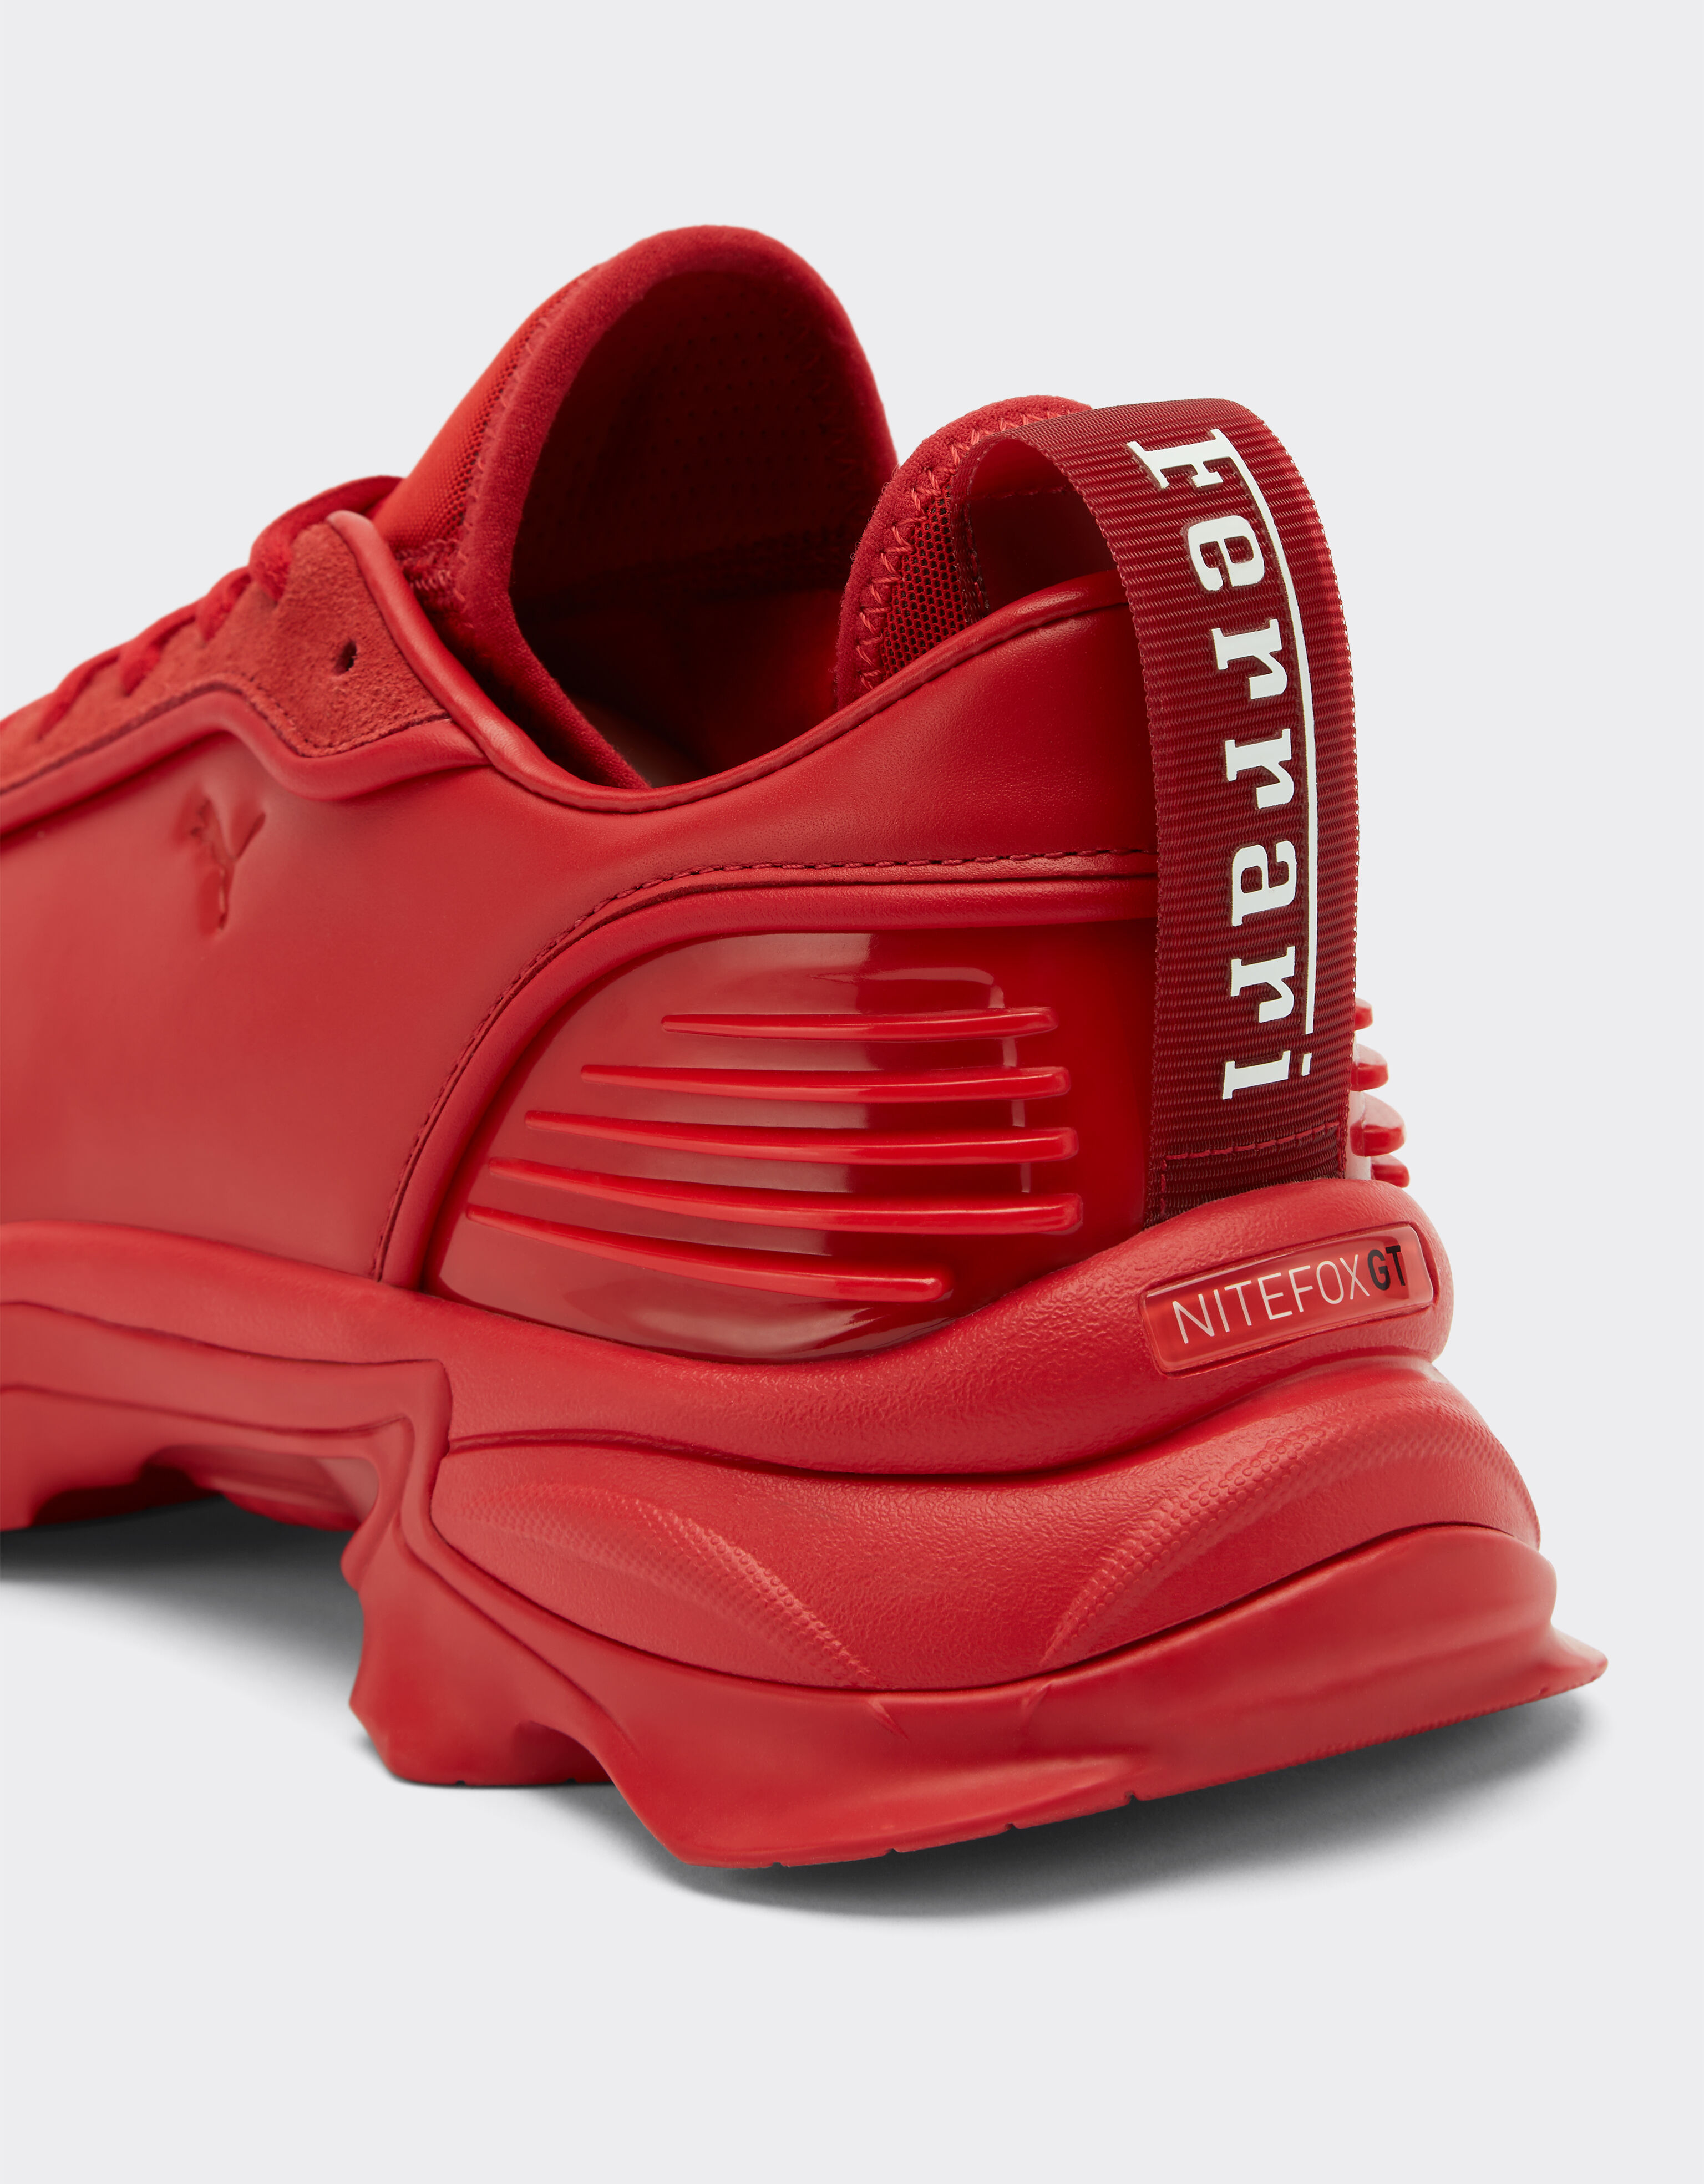 Ferrari Puma for Ferrari Nitefox trainers in Rosso Dino – Ferrari exclusive Red F0709f